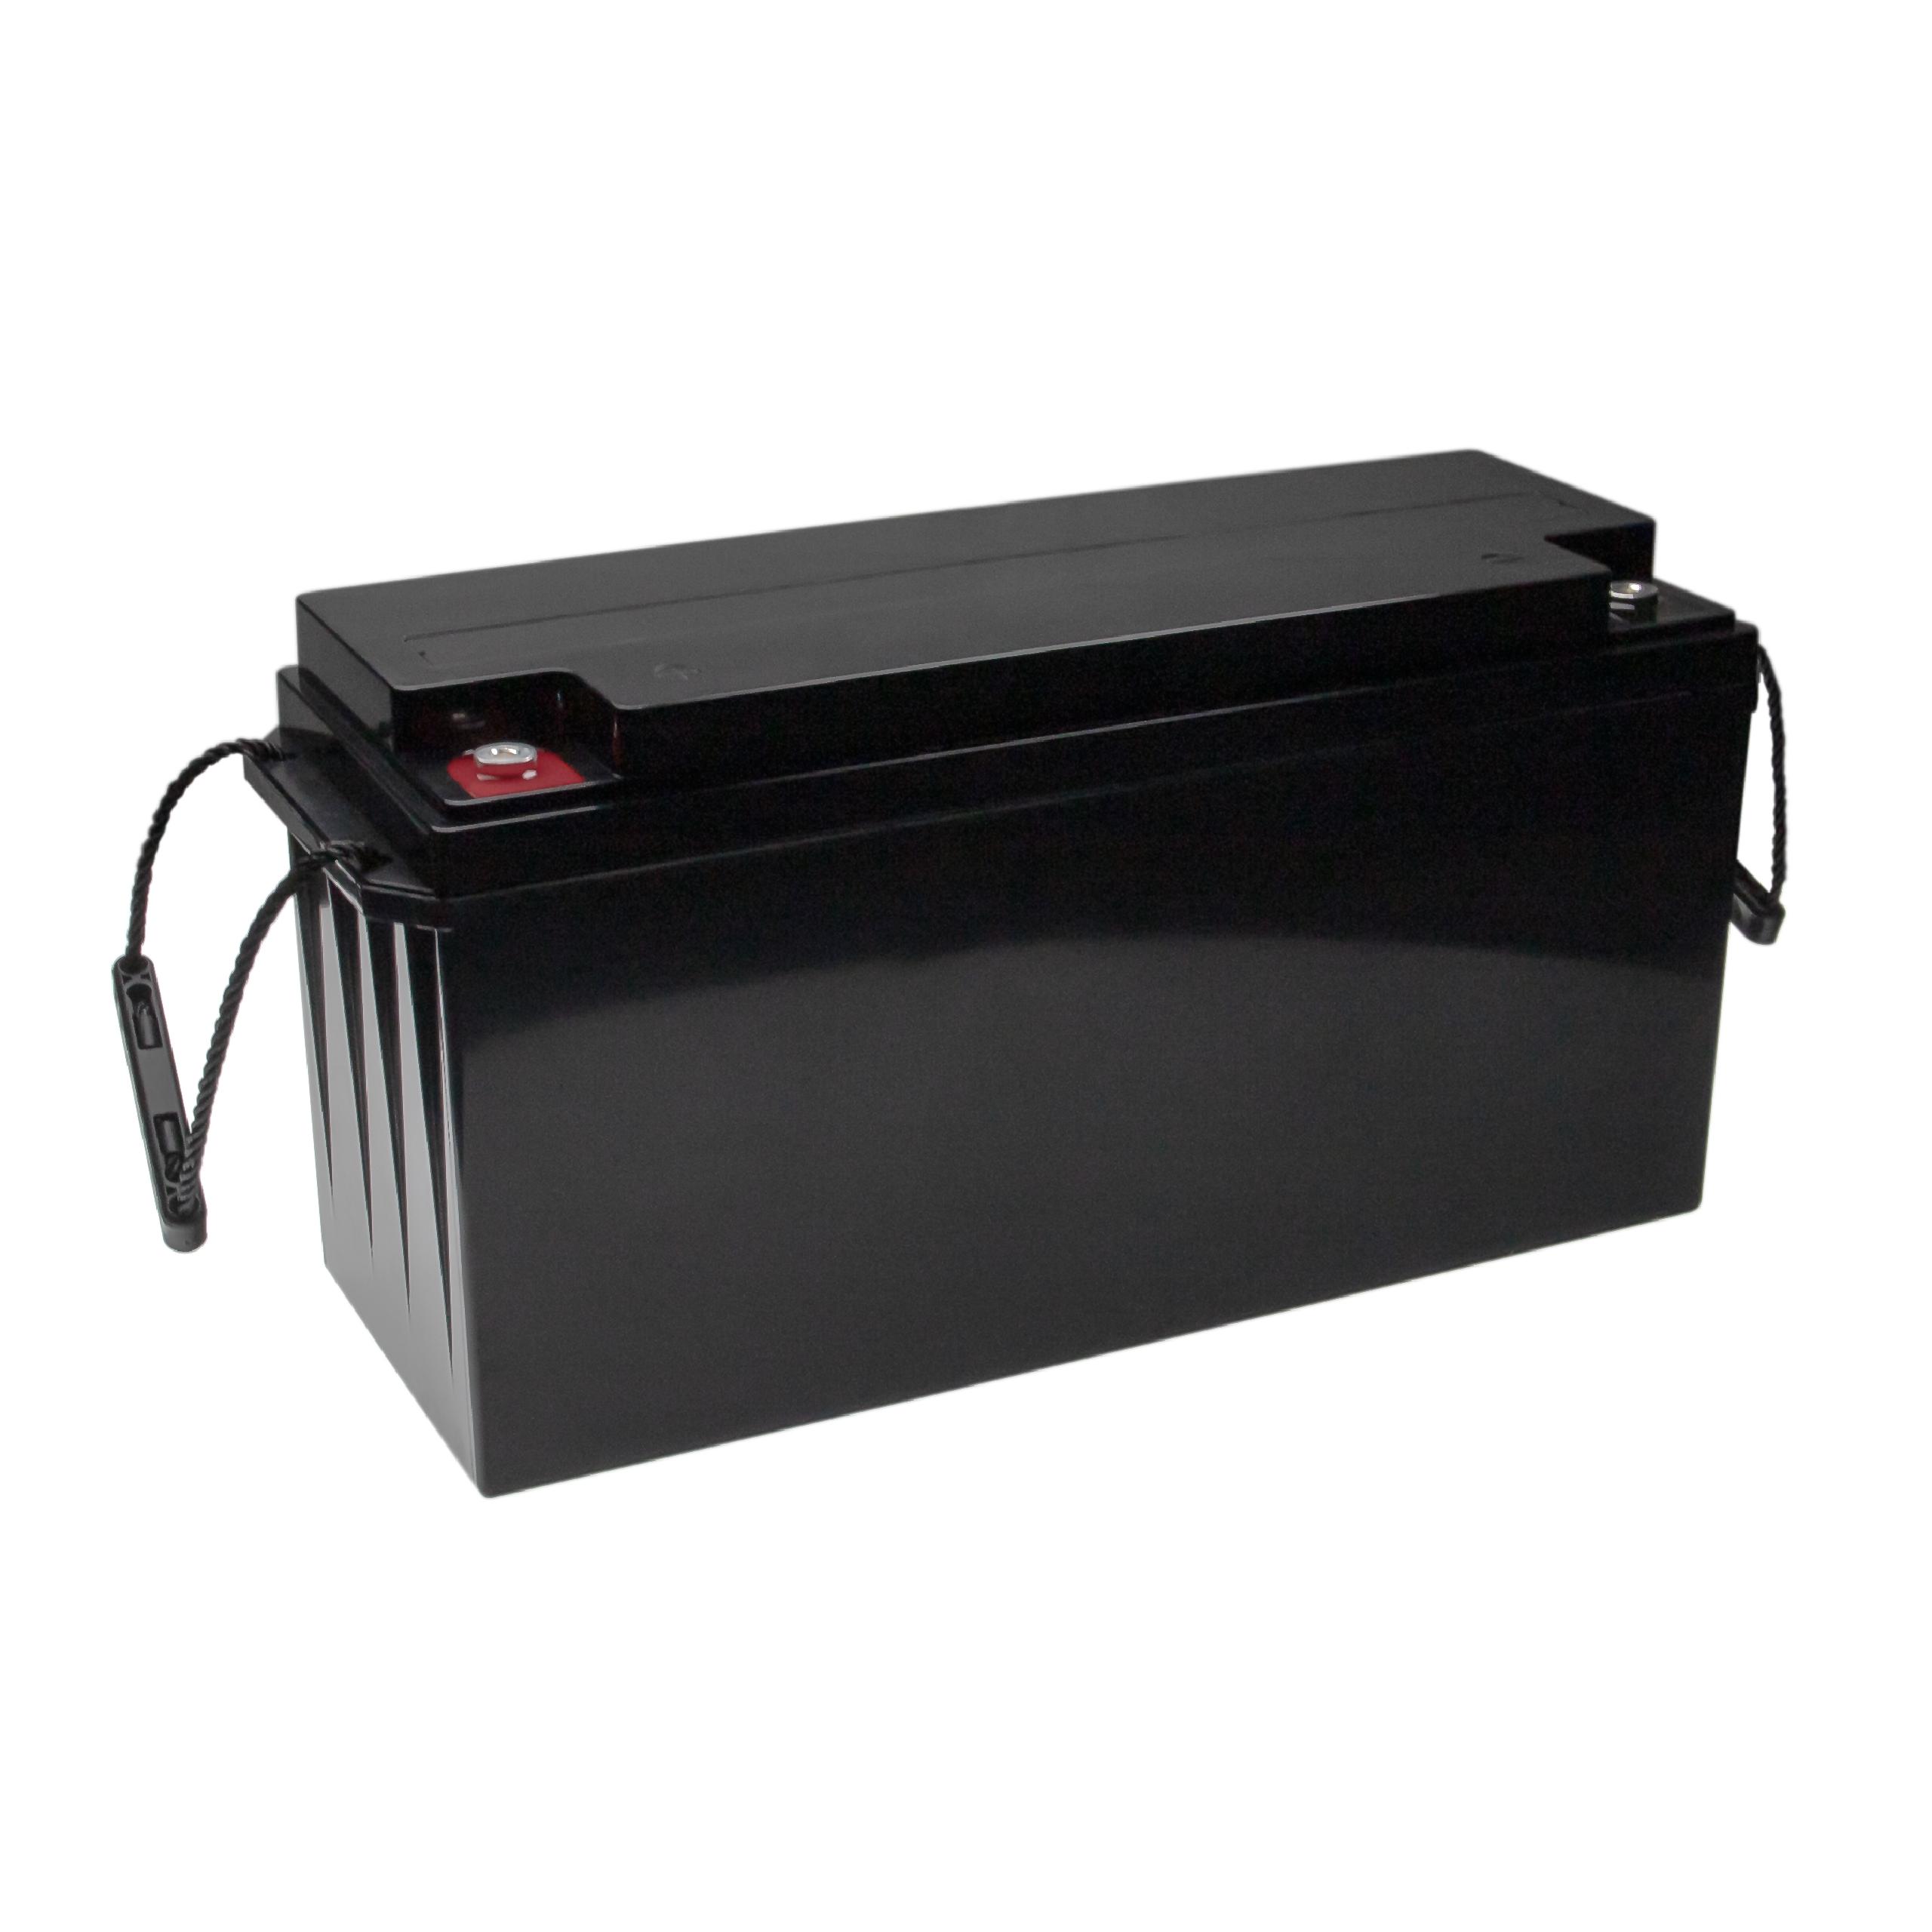 Bordbatterie Akku passend für Wohnmobil, Boot, Solaranlage - 150 Ah 12,8V LiFePO4, 150000mAh, schwarz